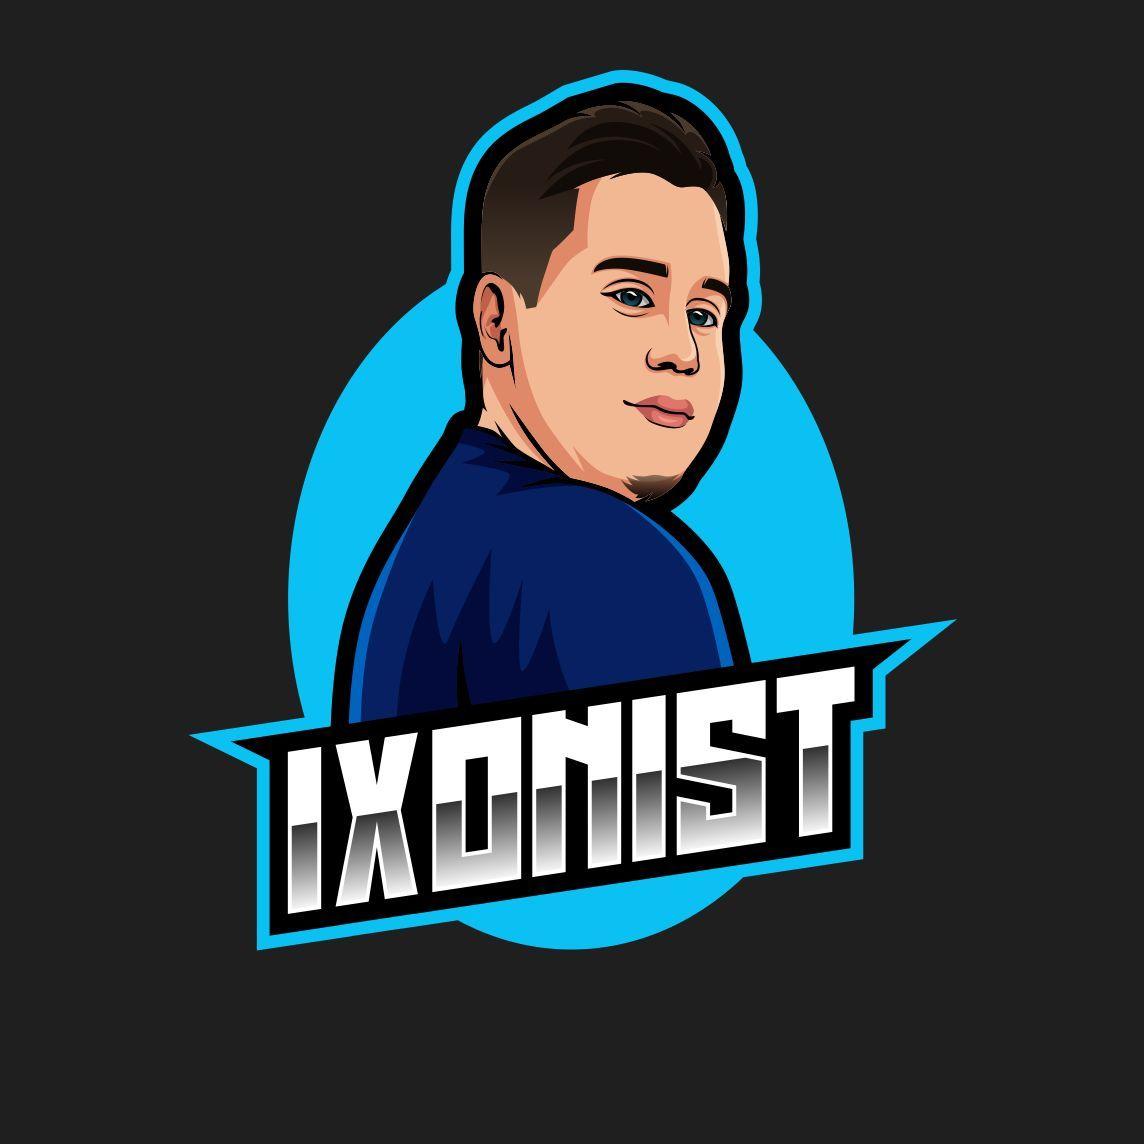 Player Ixonist avatar